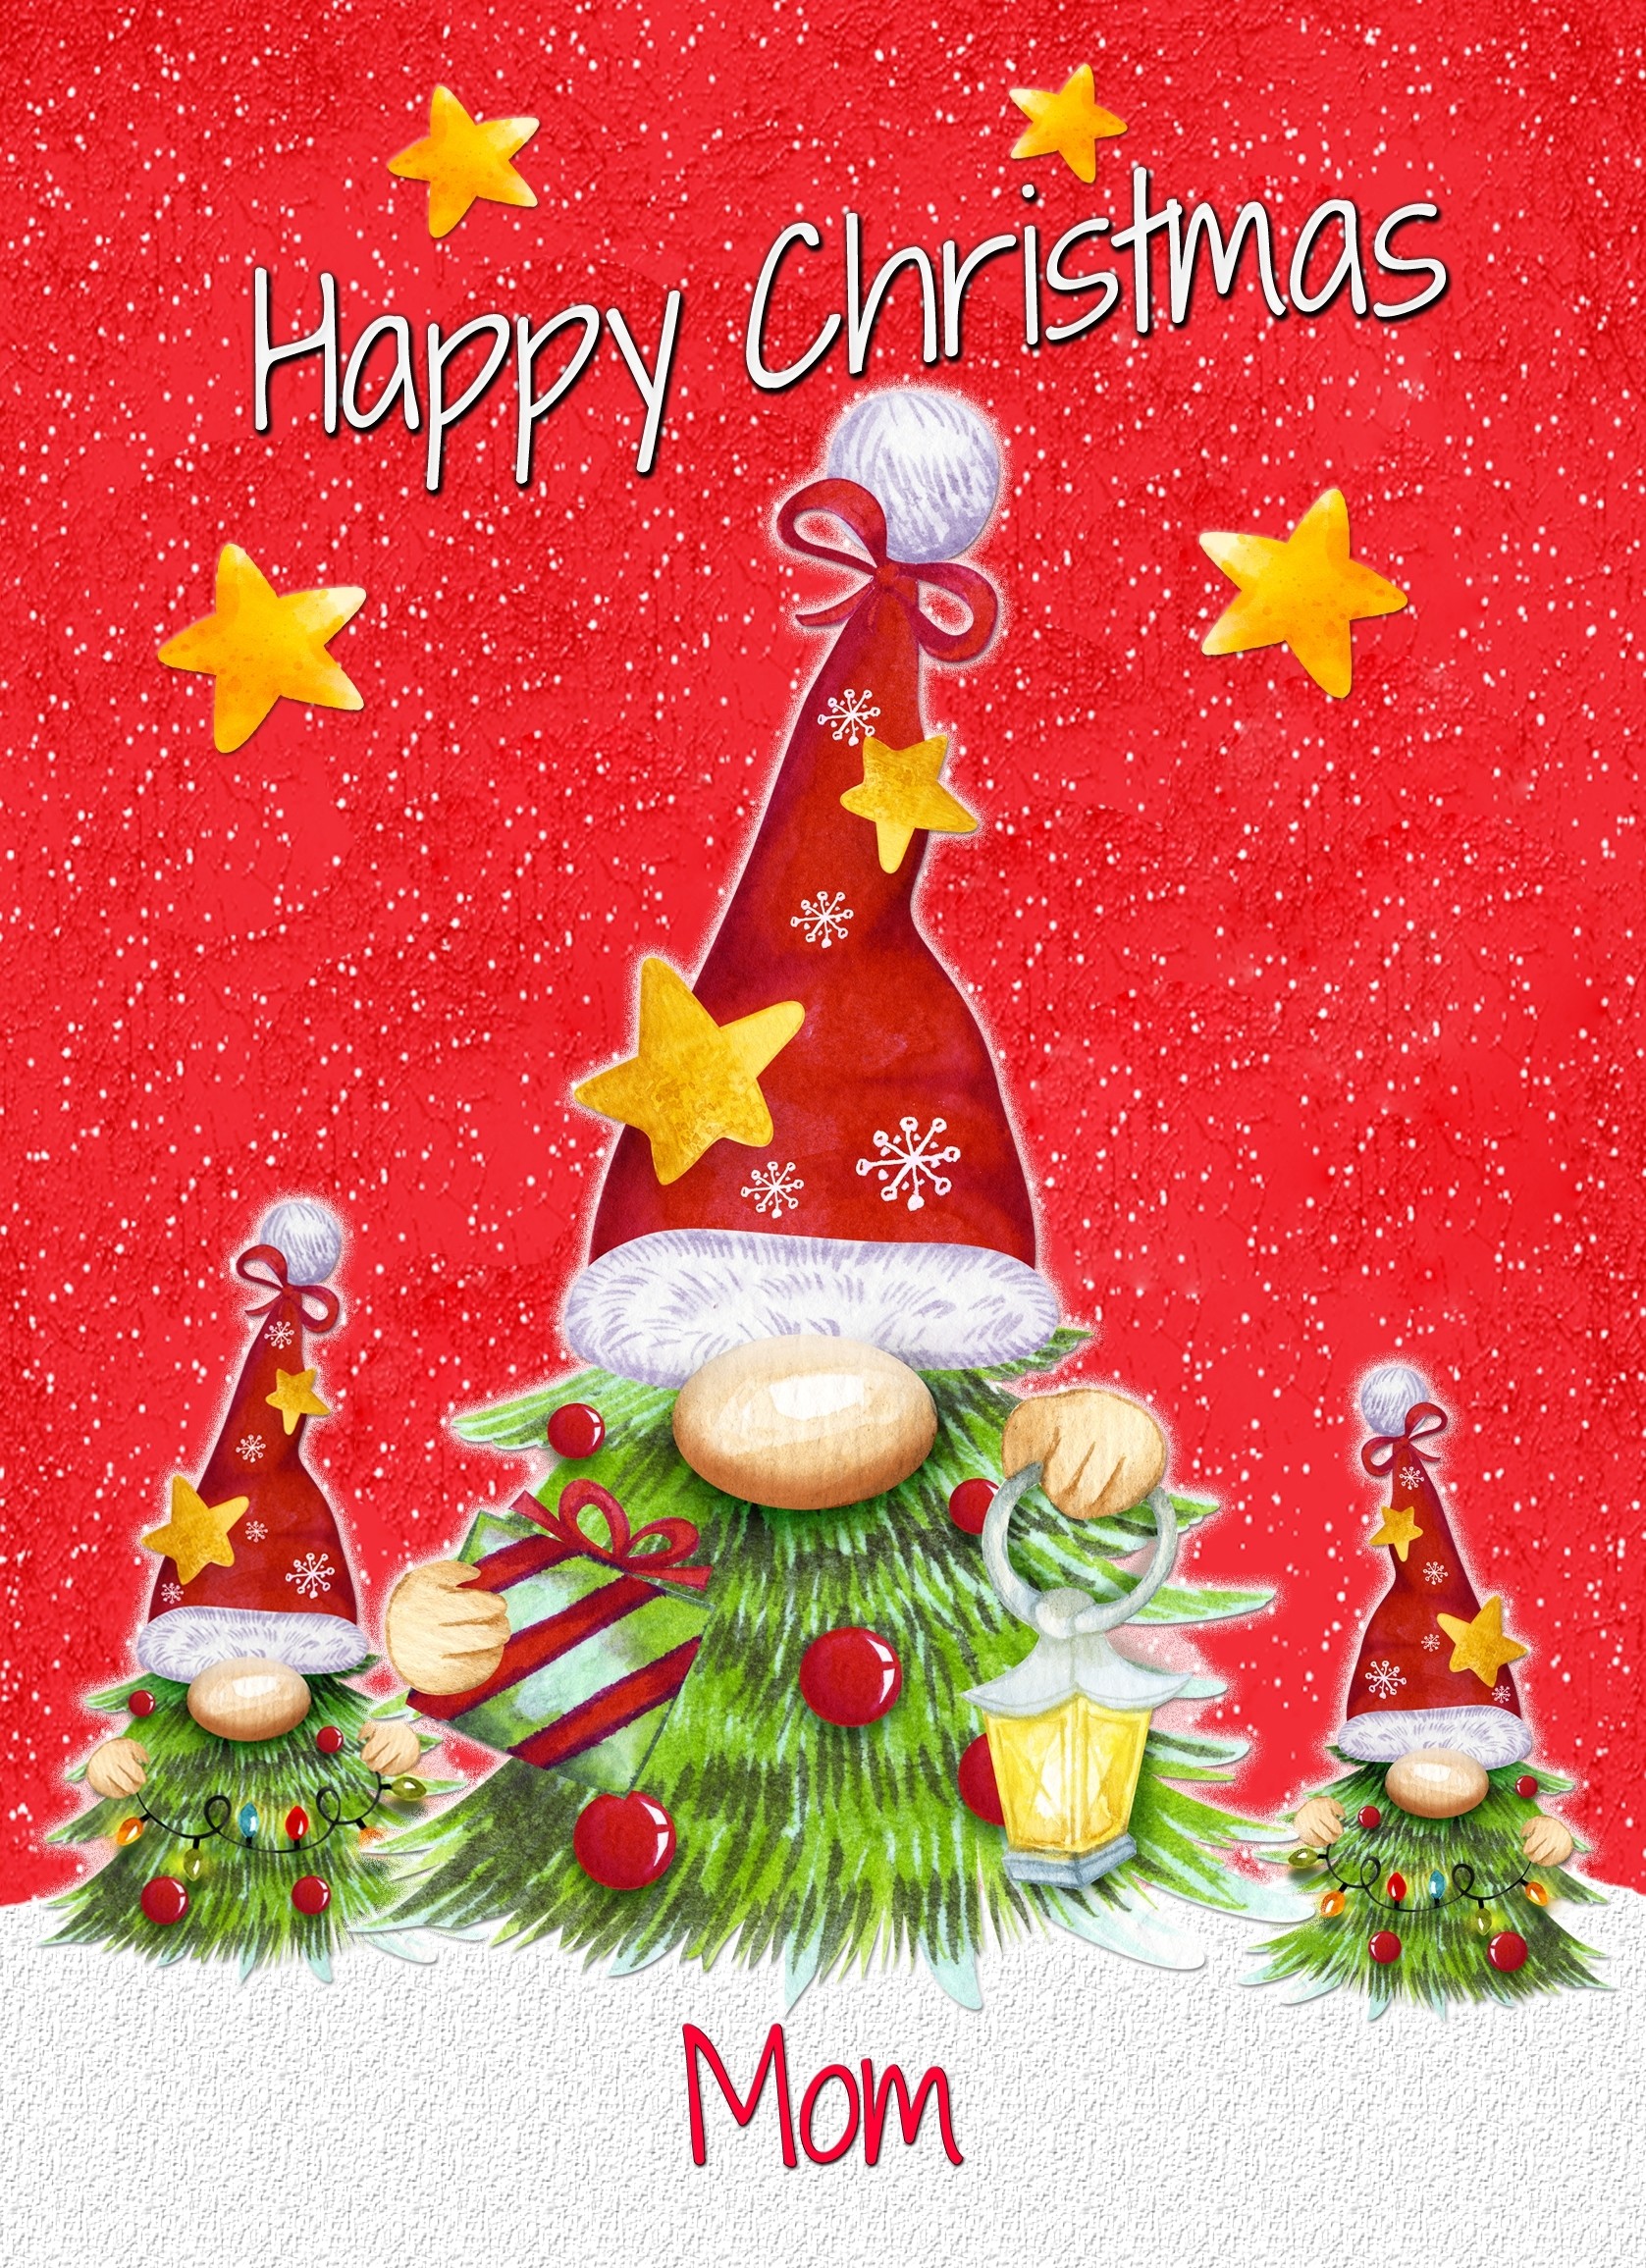 Christmas Card For Mom (Gnome, Red)